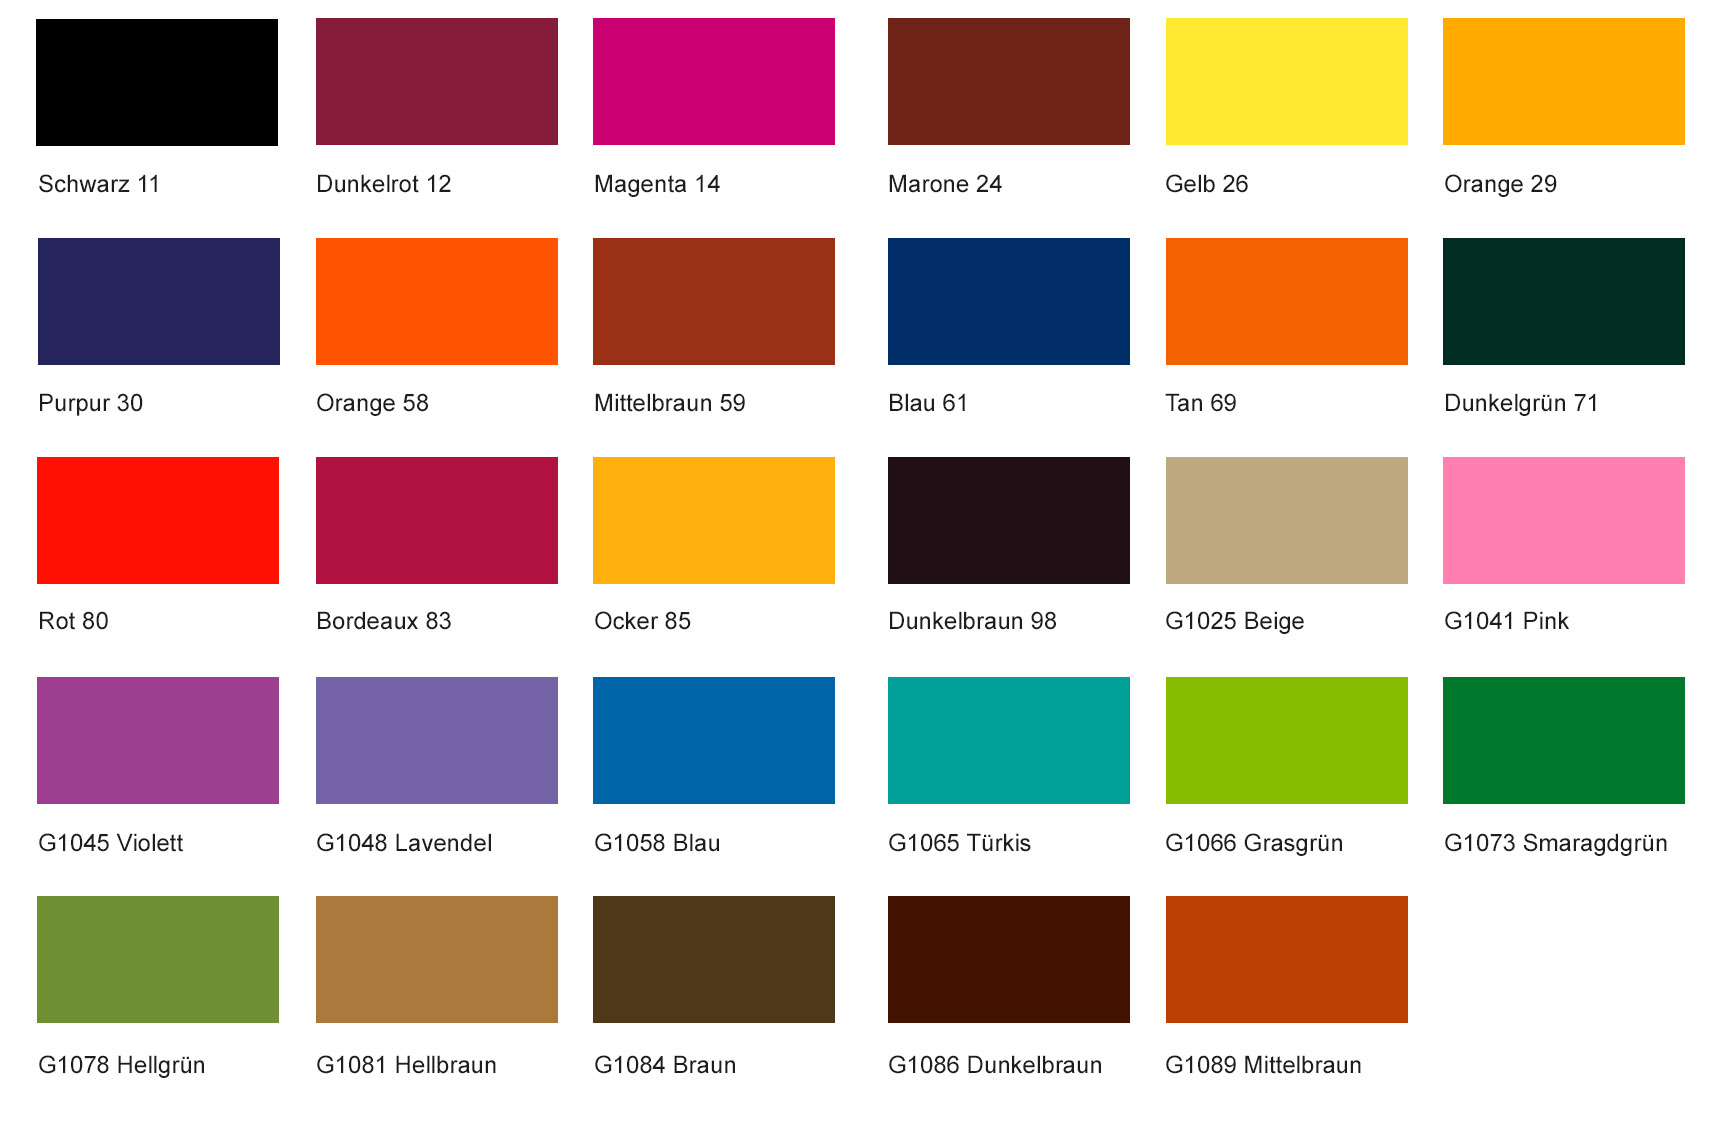 Leather Dye Chart